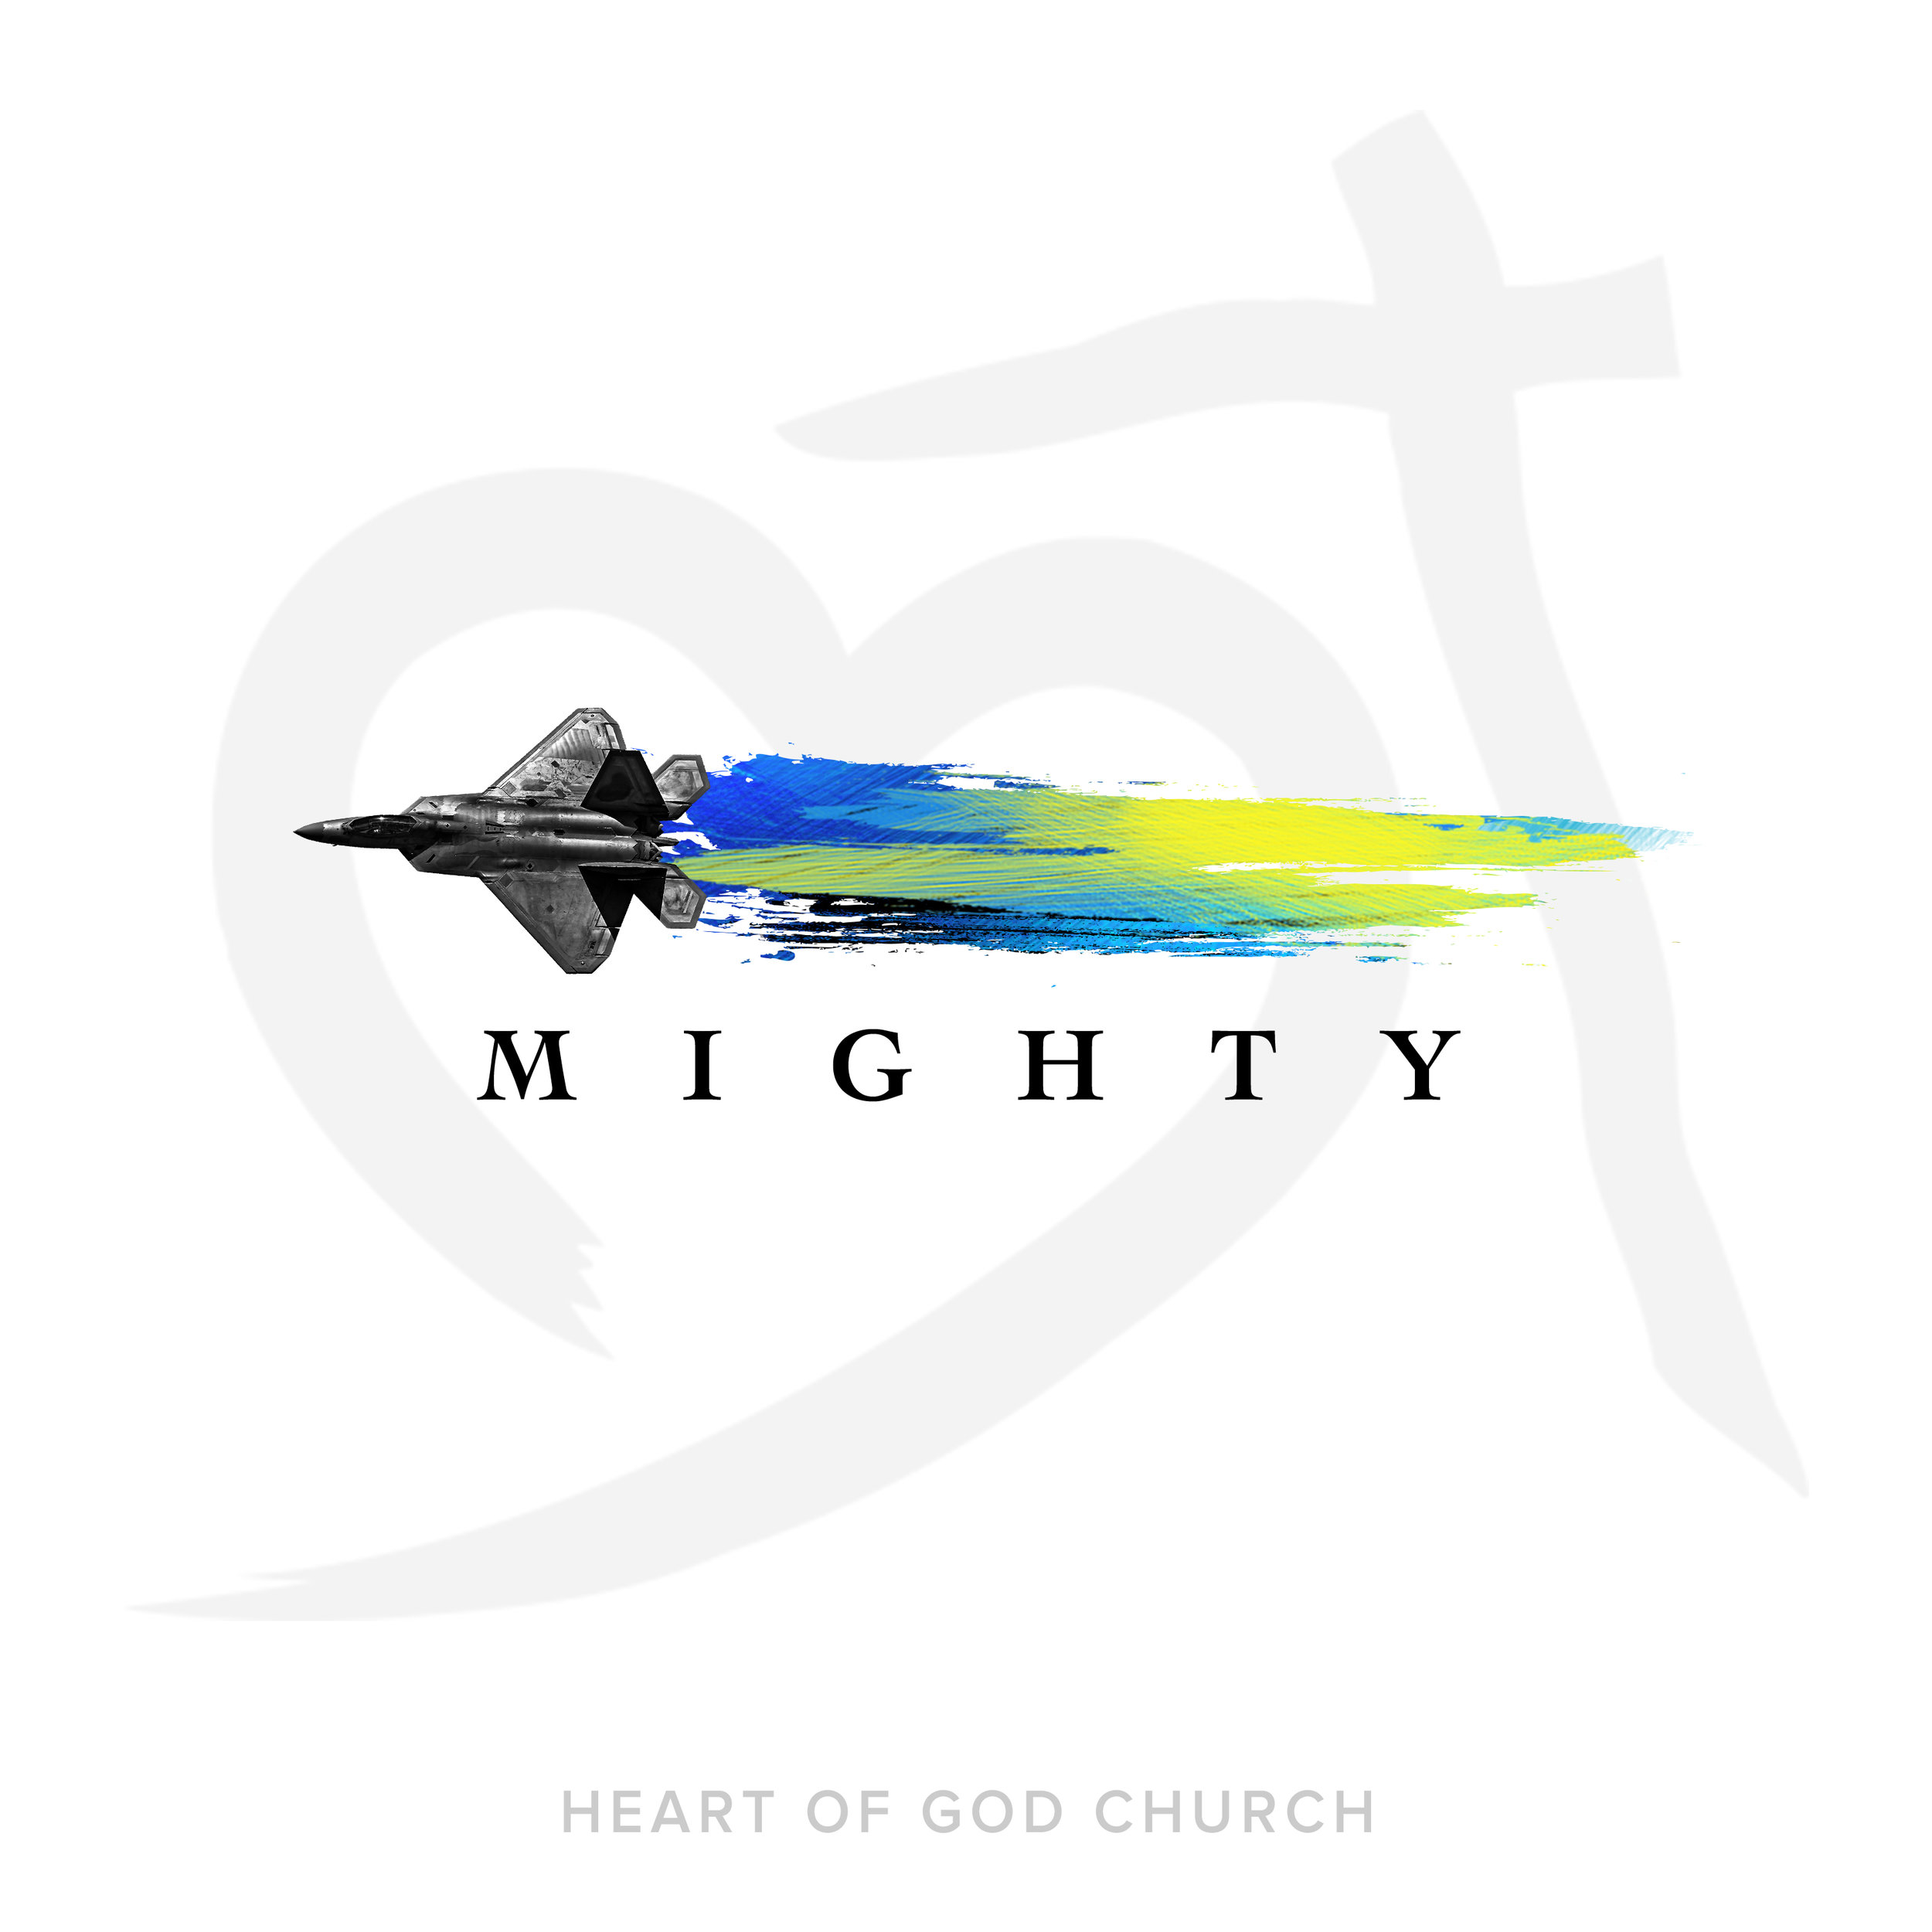 Heart of God Church_ Mighty Single_3000x3000_web2.jpg